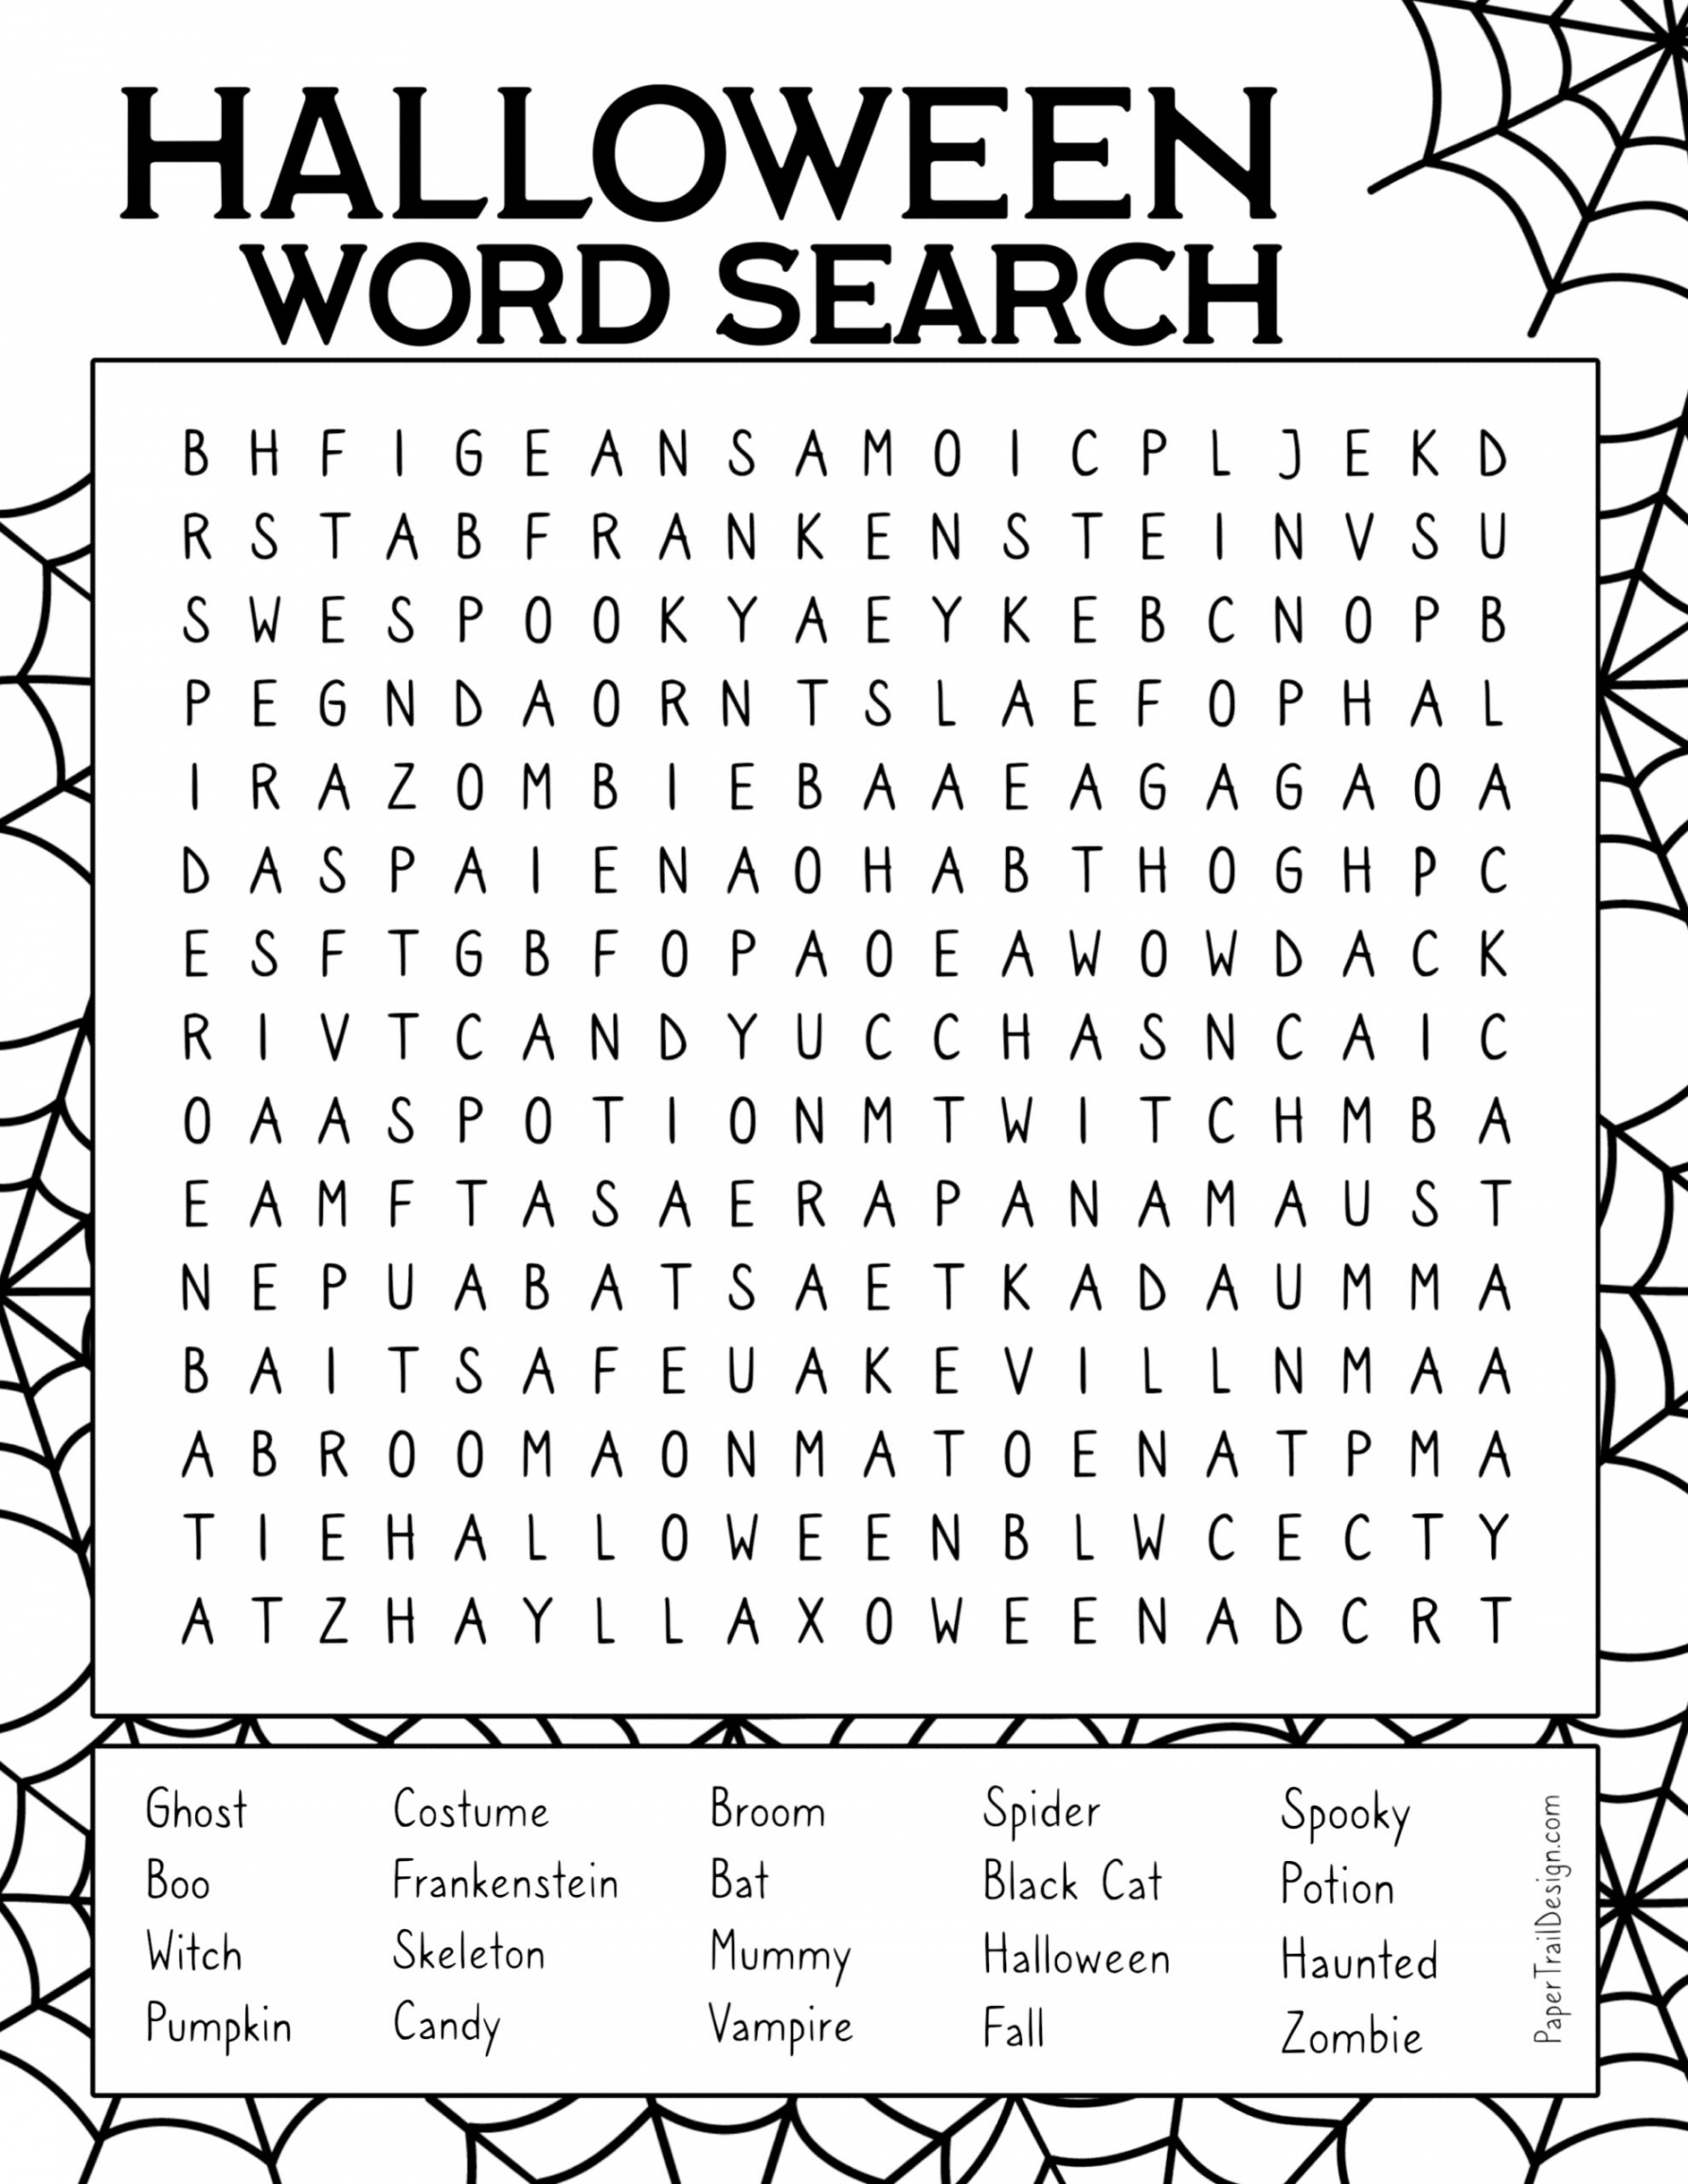 Free Printable Halloween Word Search - Printable - Free Printable Halloween Word Search - Paper Trail Design